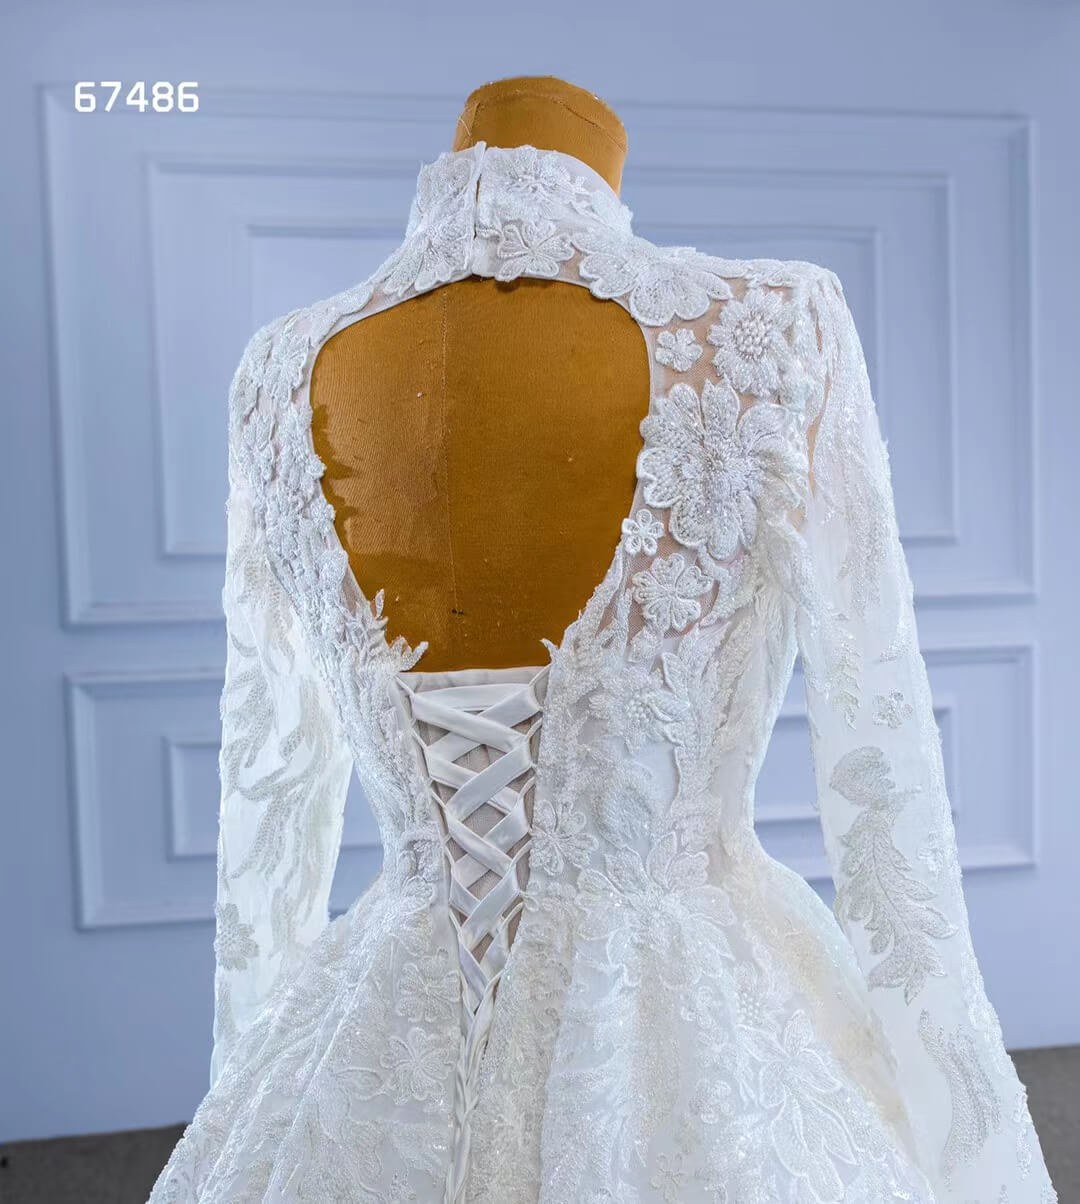 Modest High Neck Wedding Dress with Long Sleeves 67486-wedding dresses-Viniodress-Viniodress